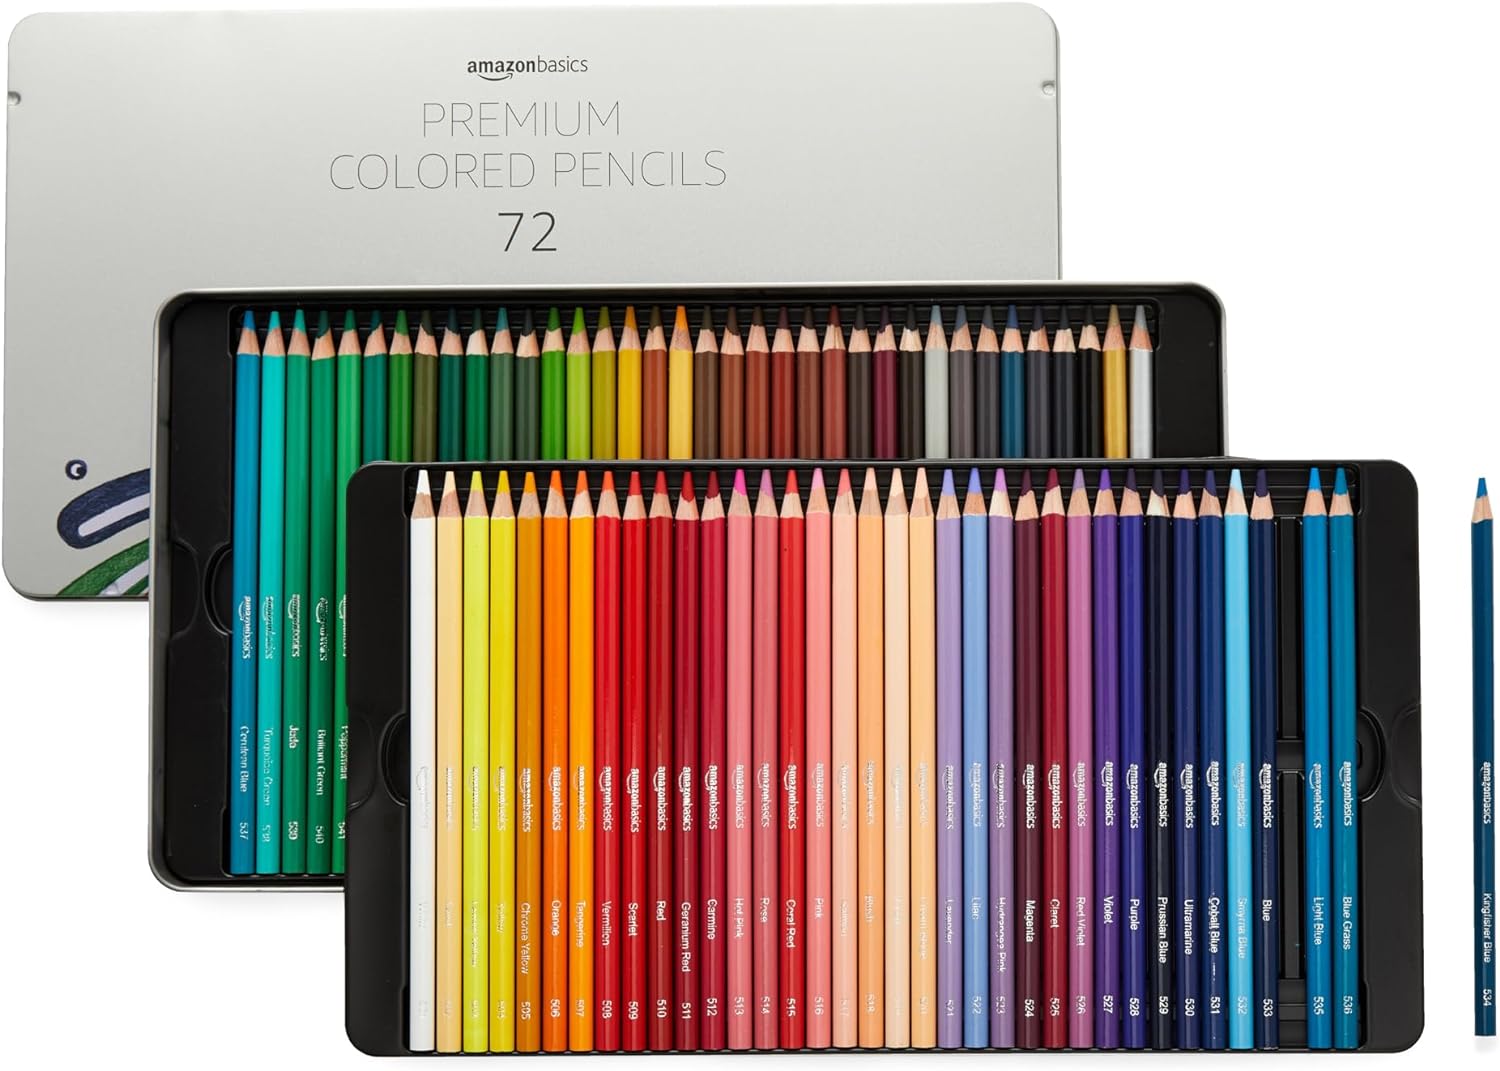 72-Count Amazon Basics Premium Soft Core Colored Pencils $10.70 + Free S&H w/ Prime or $35+